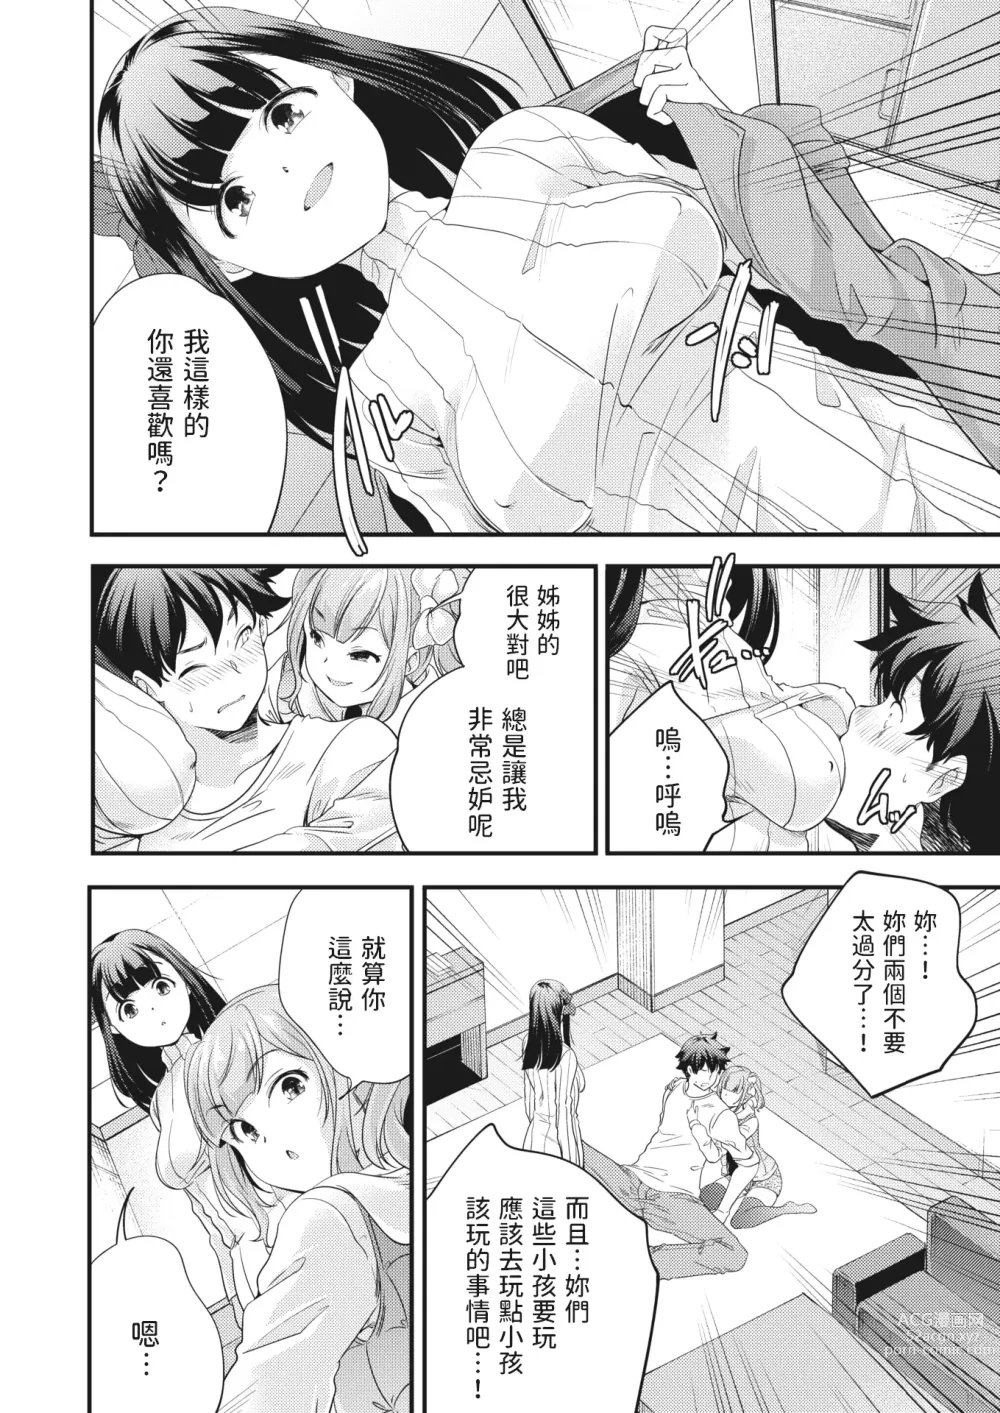 Page 6 of manga Ariadone